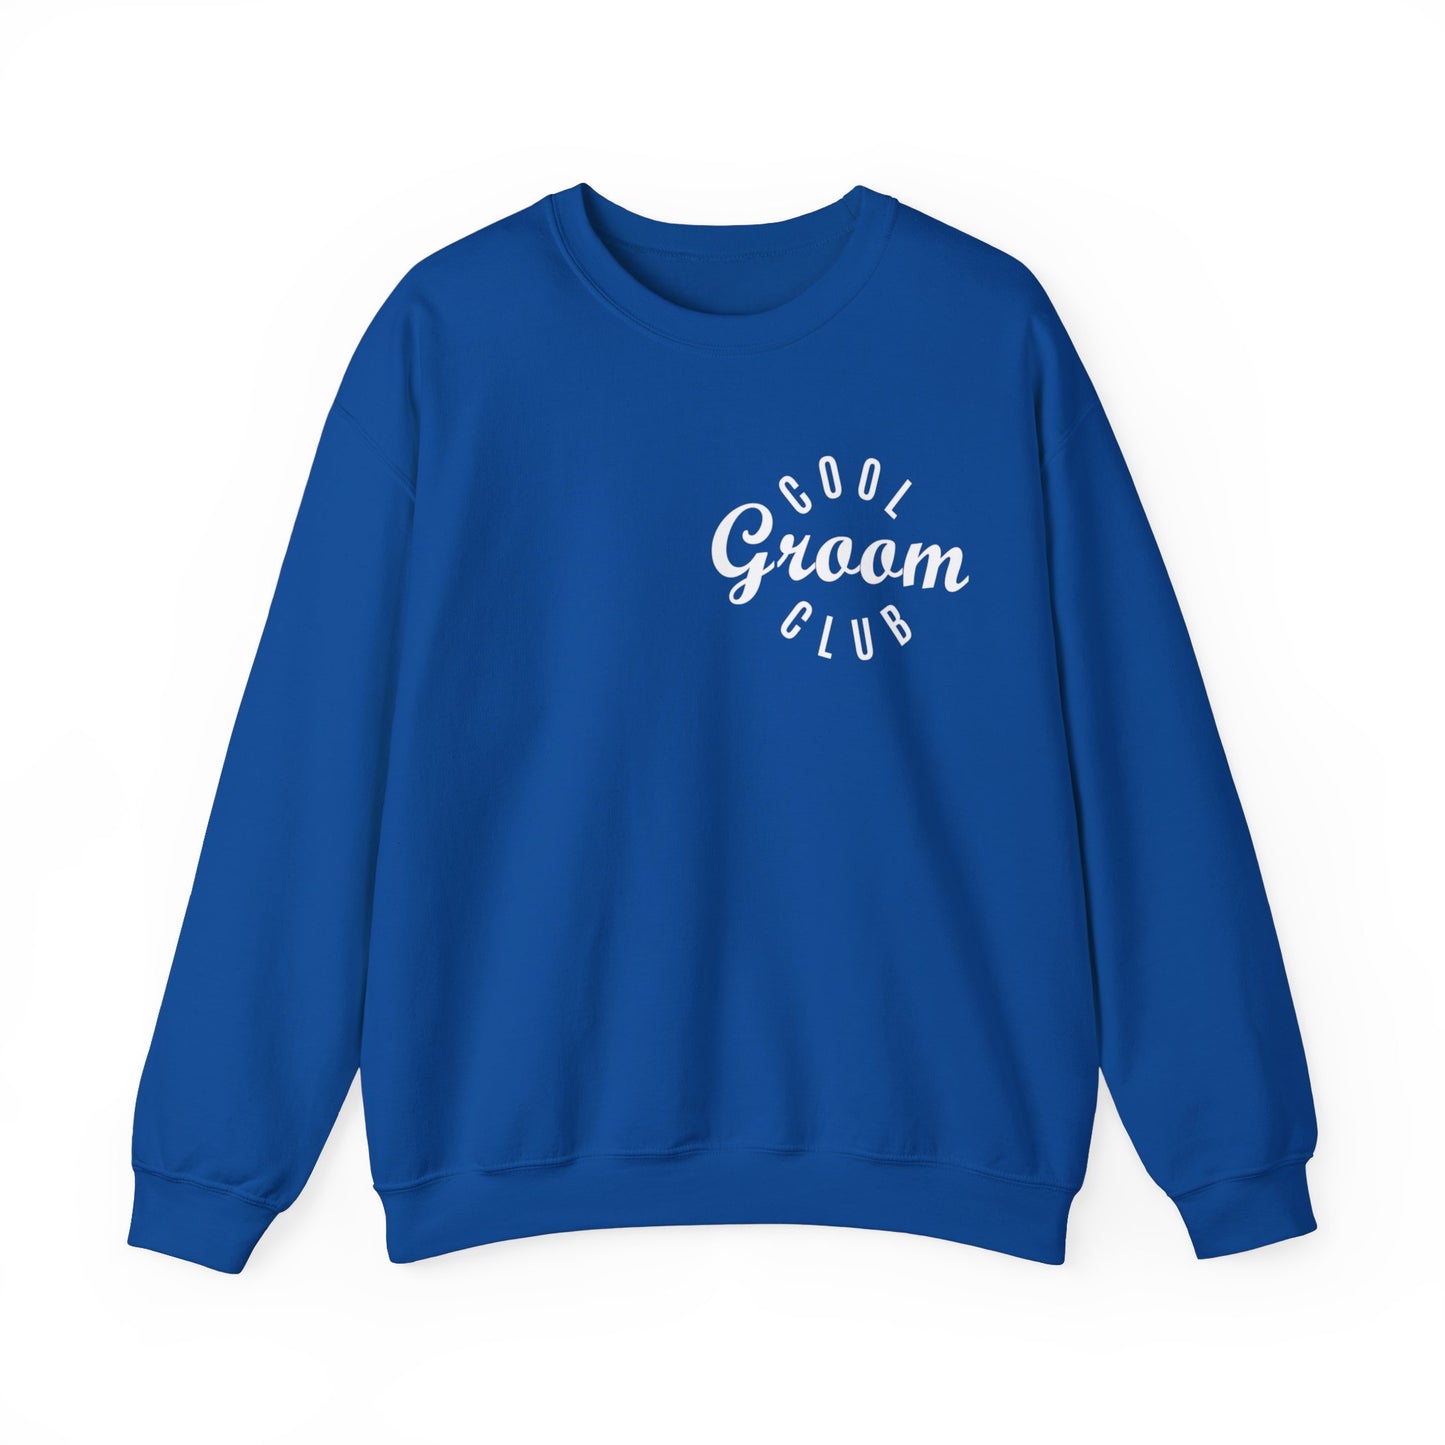 Cool Groom Club Sweatshirt for Men, Future Groom Bachelorette Sweatshirt, Gift for Groom Future, Sweatshirt for Groom to Be, S1363